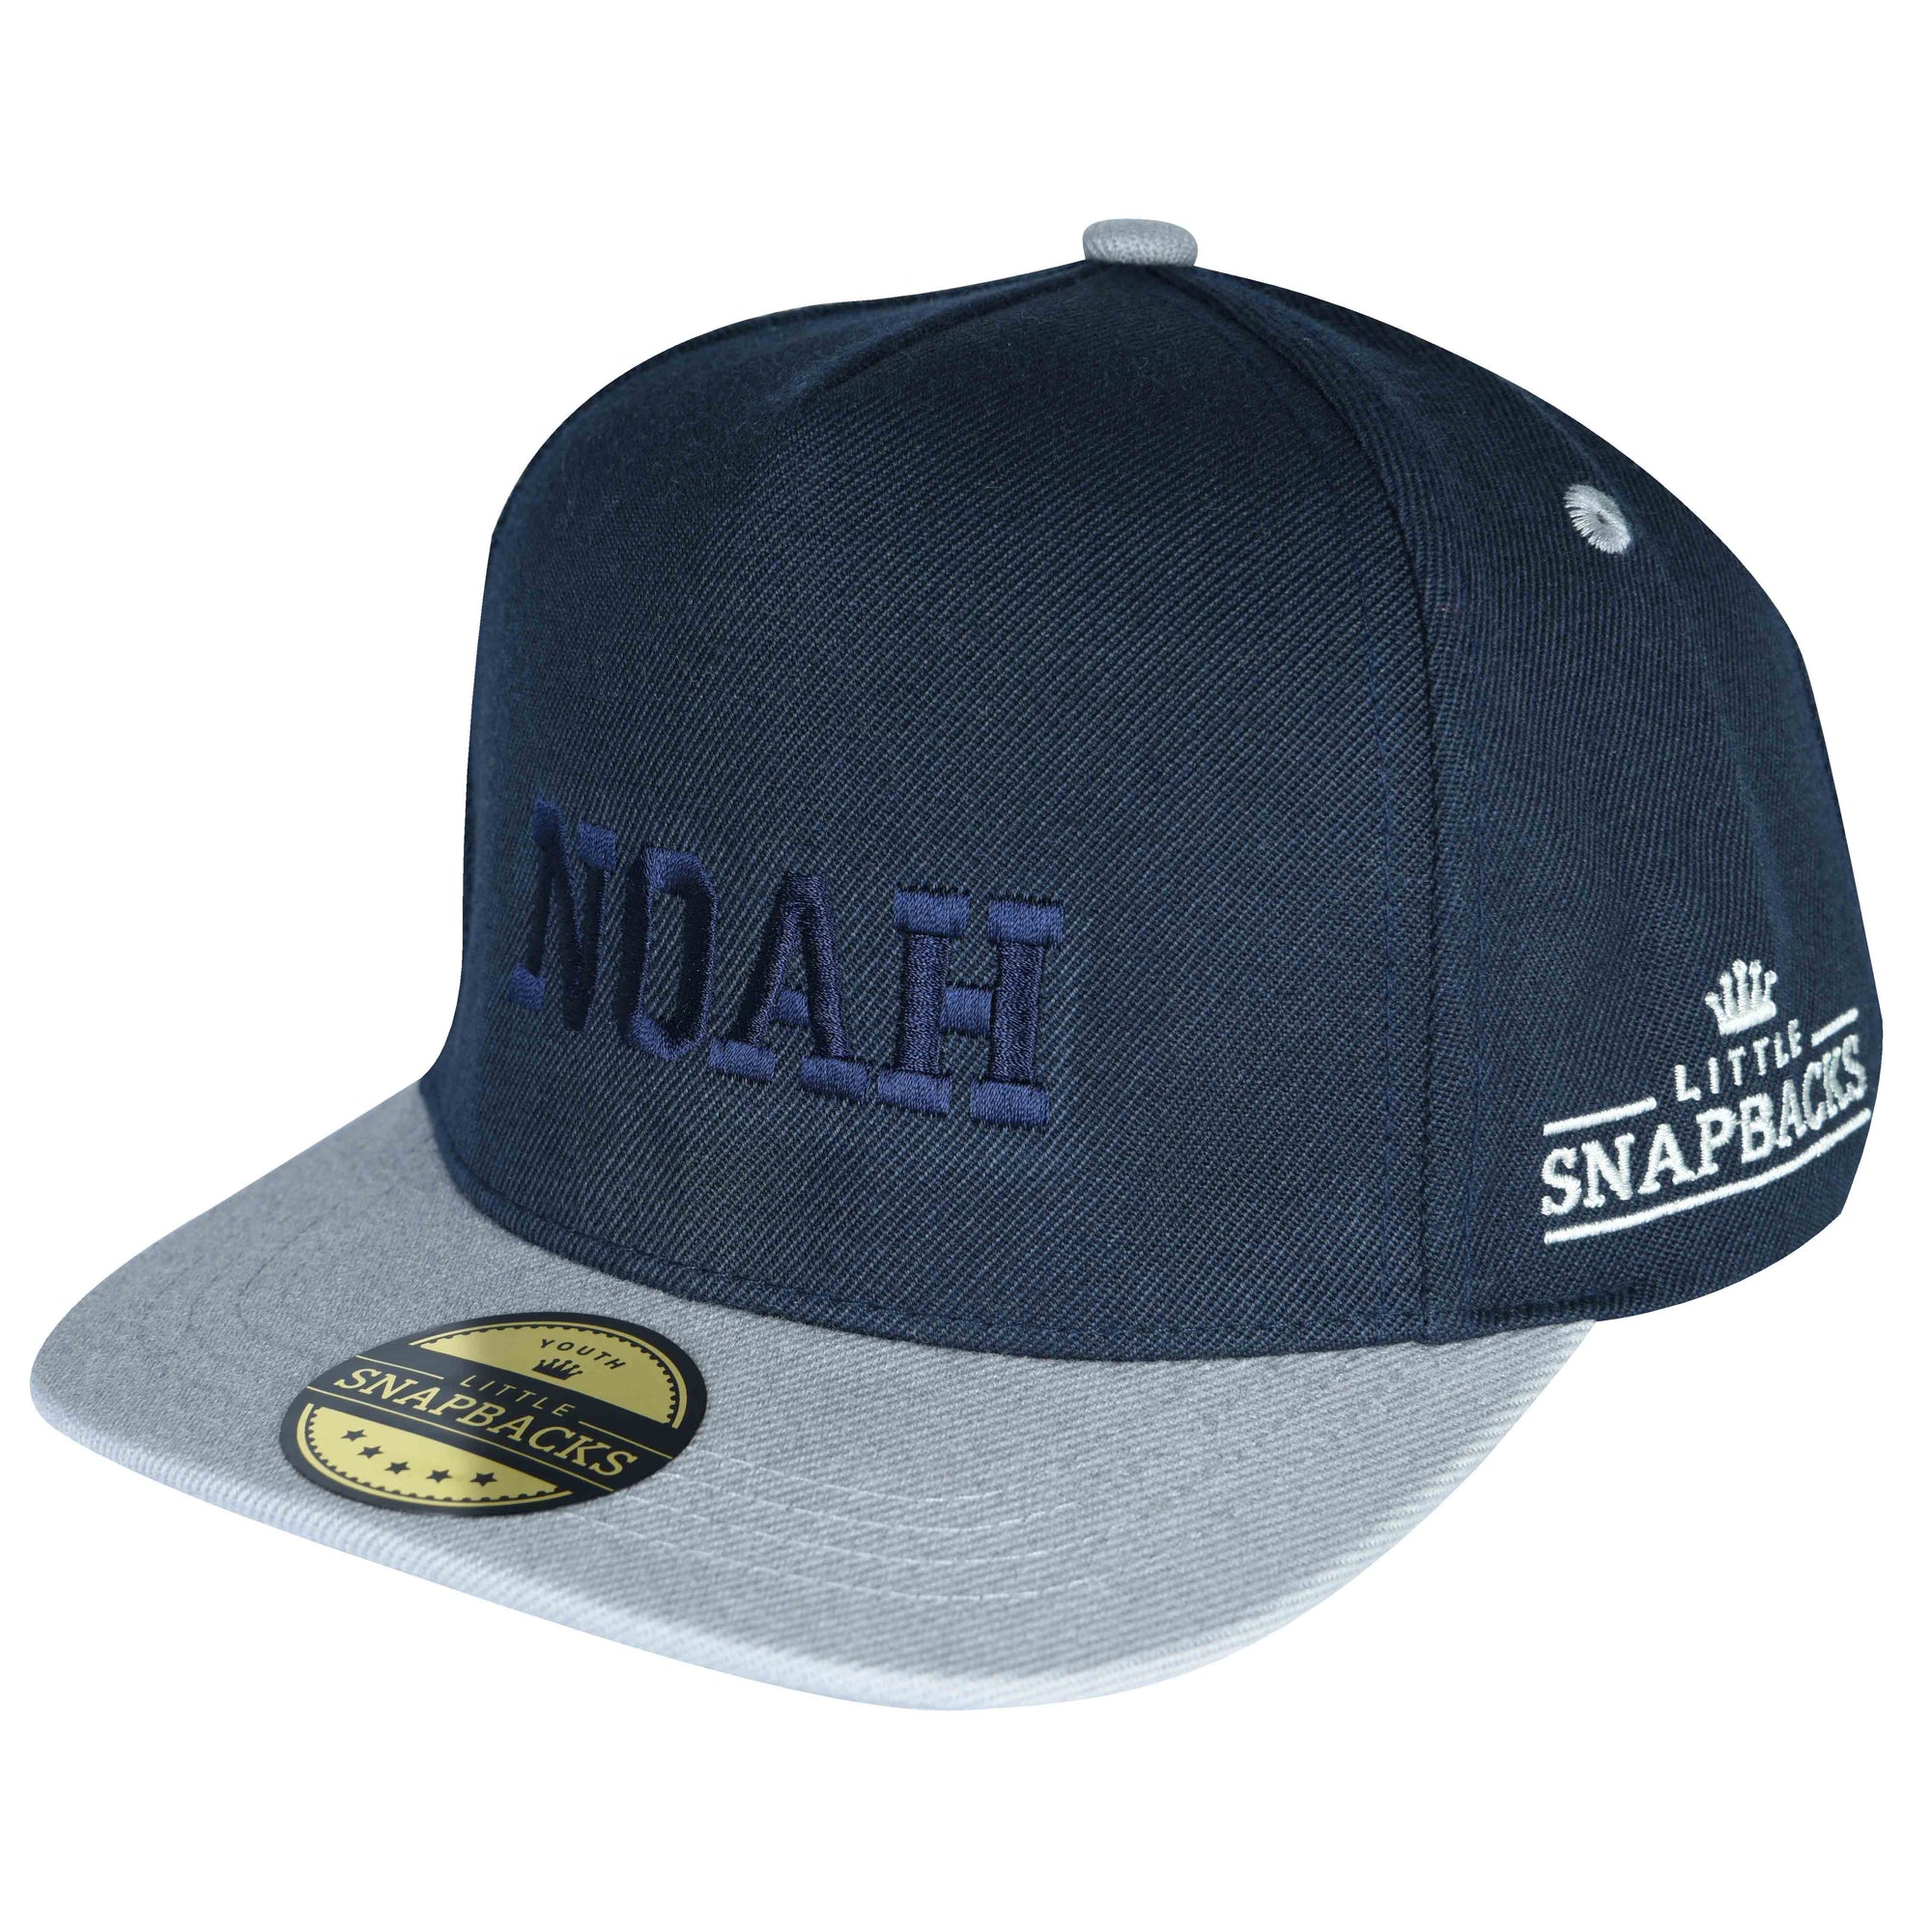 Navy Hat, Navy Thread